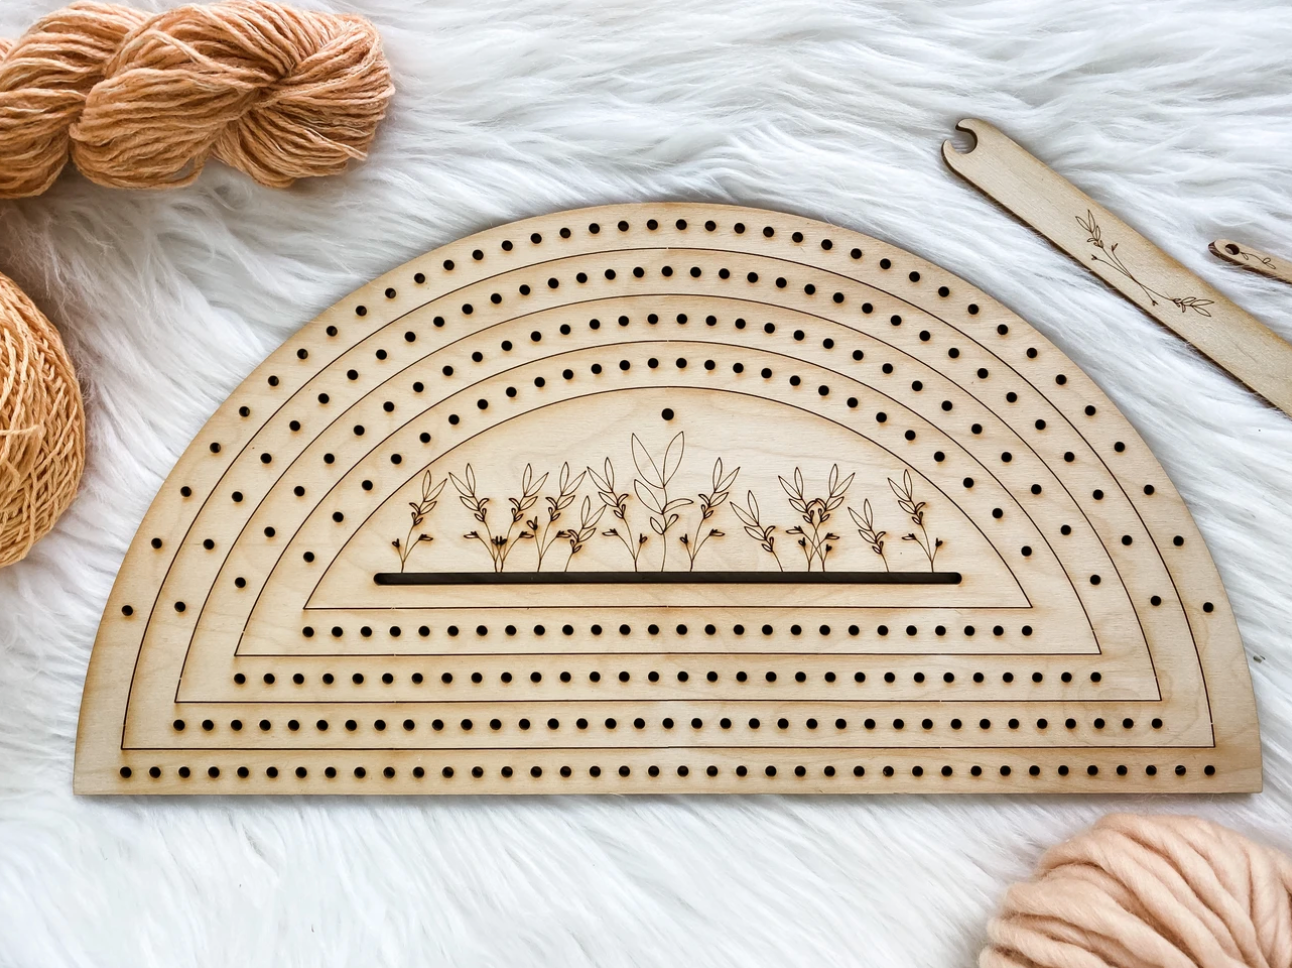 wooden loom&tassel comb and hand weaving comb